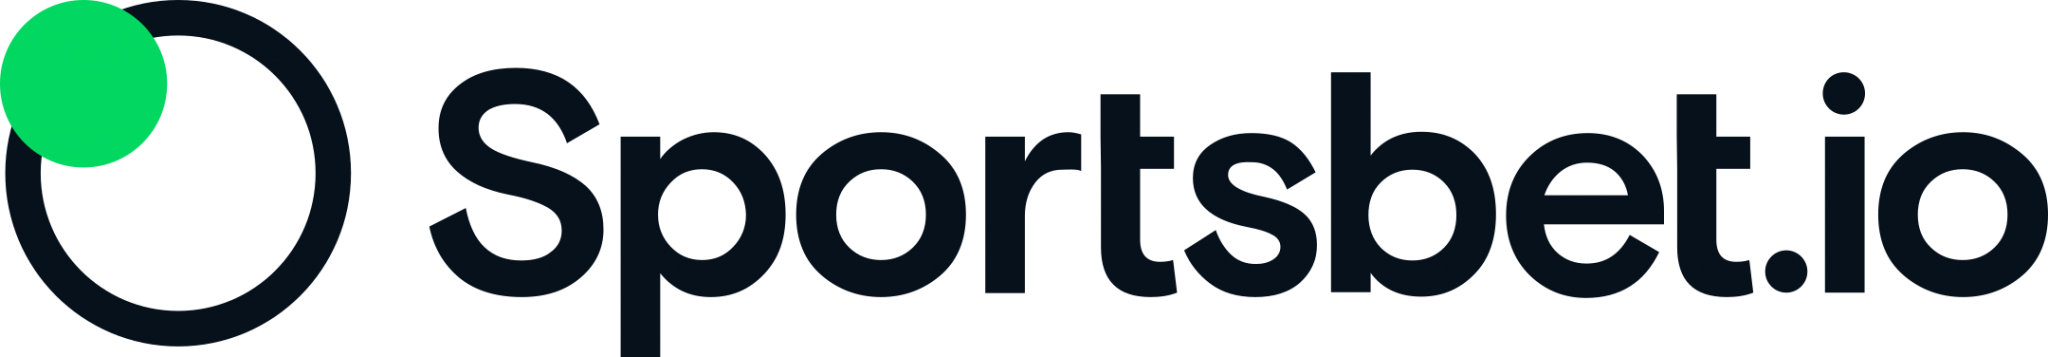 www bet sport com